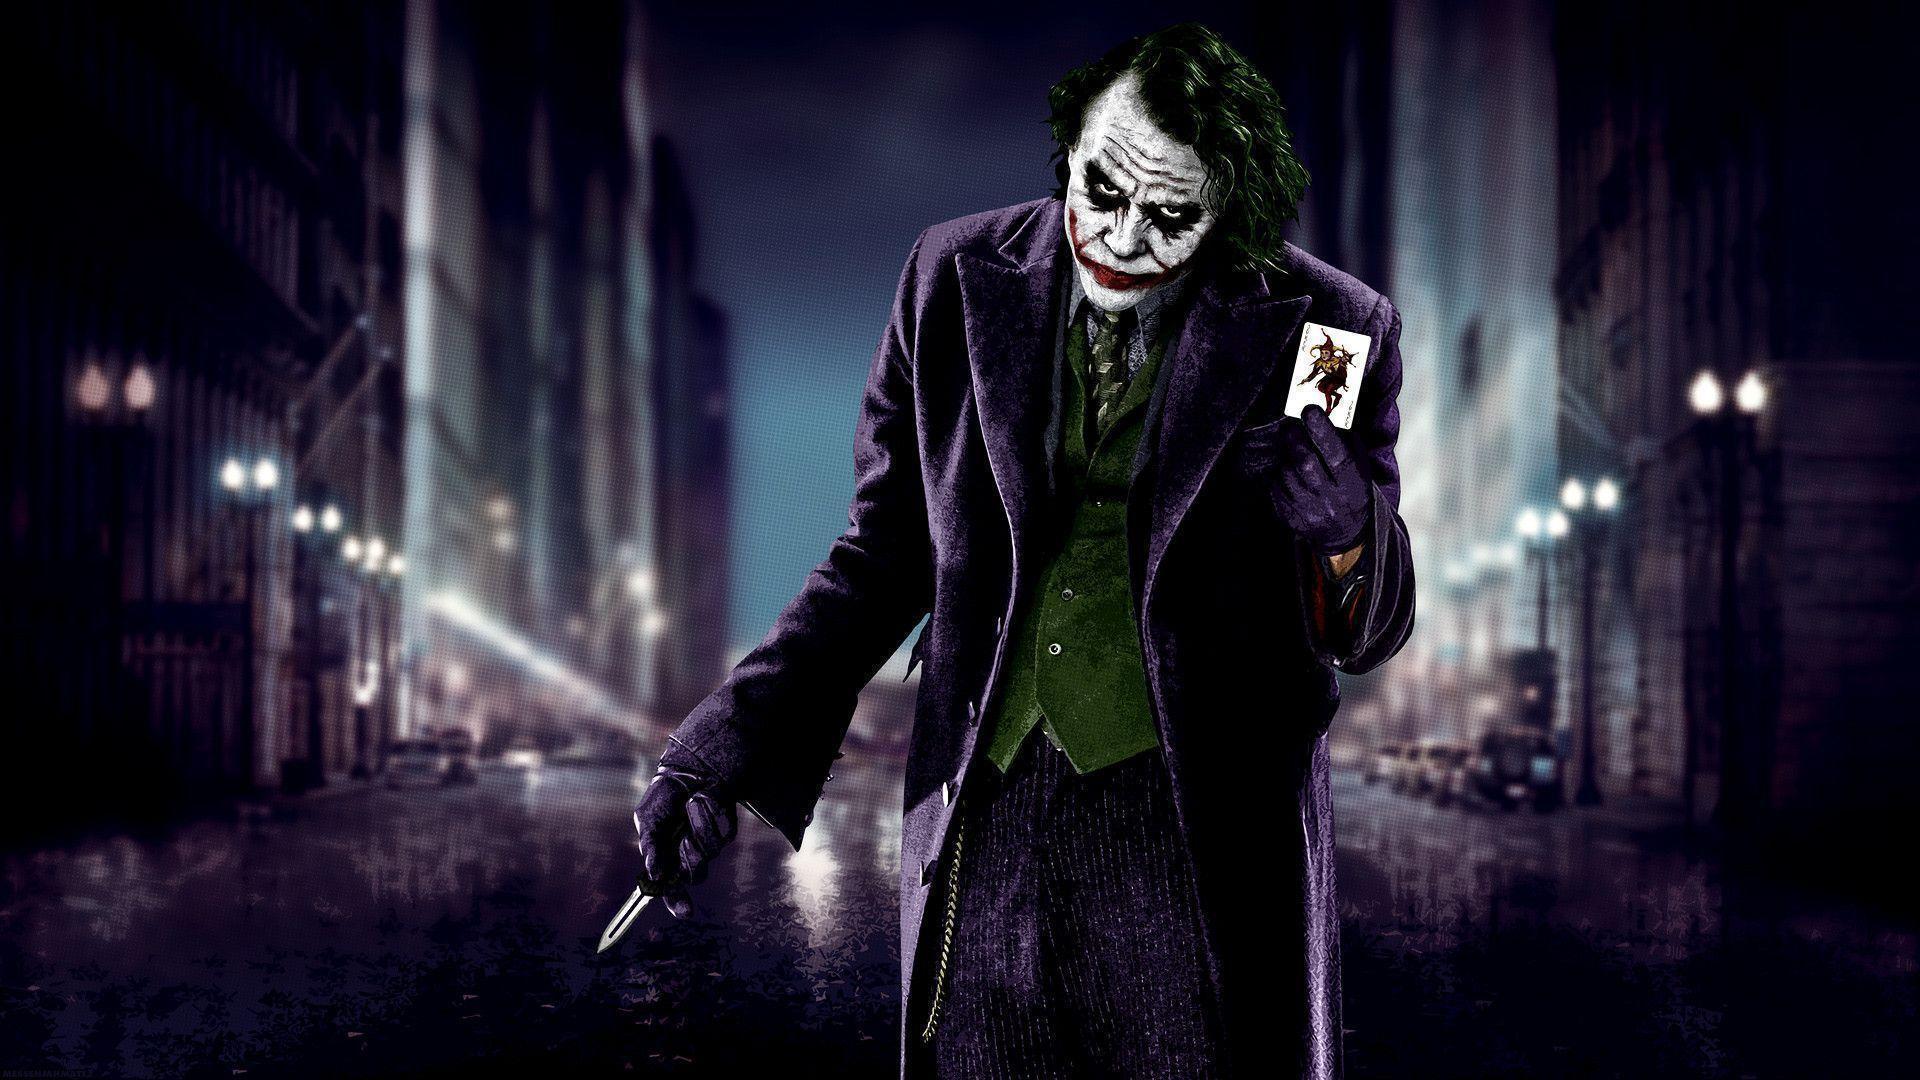 Free download Joker Desktop Background [1920x1080]